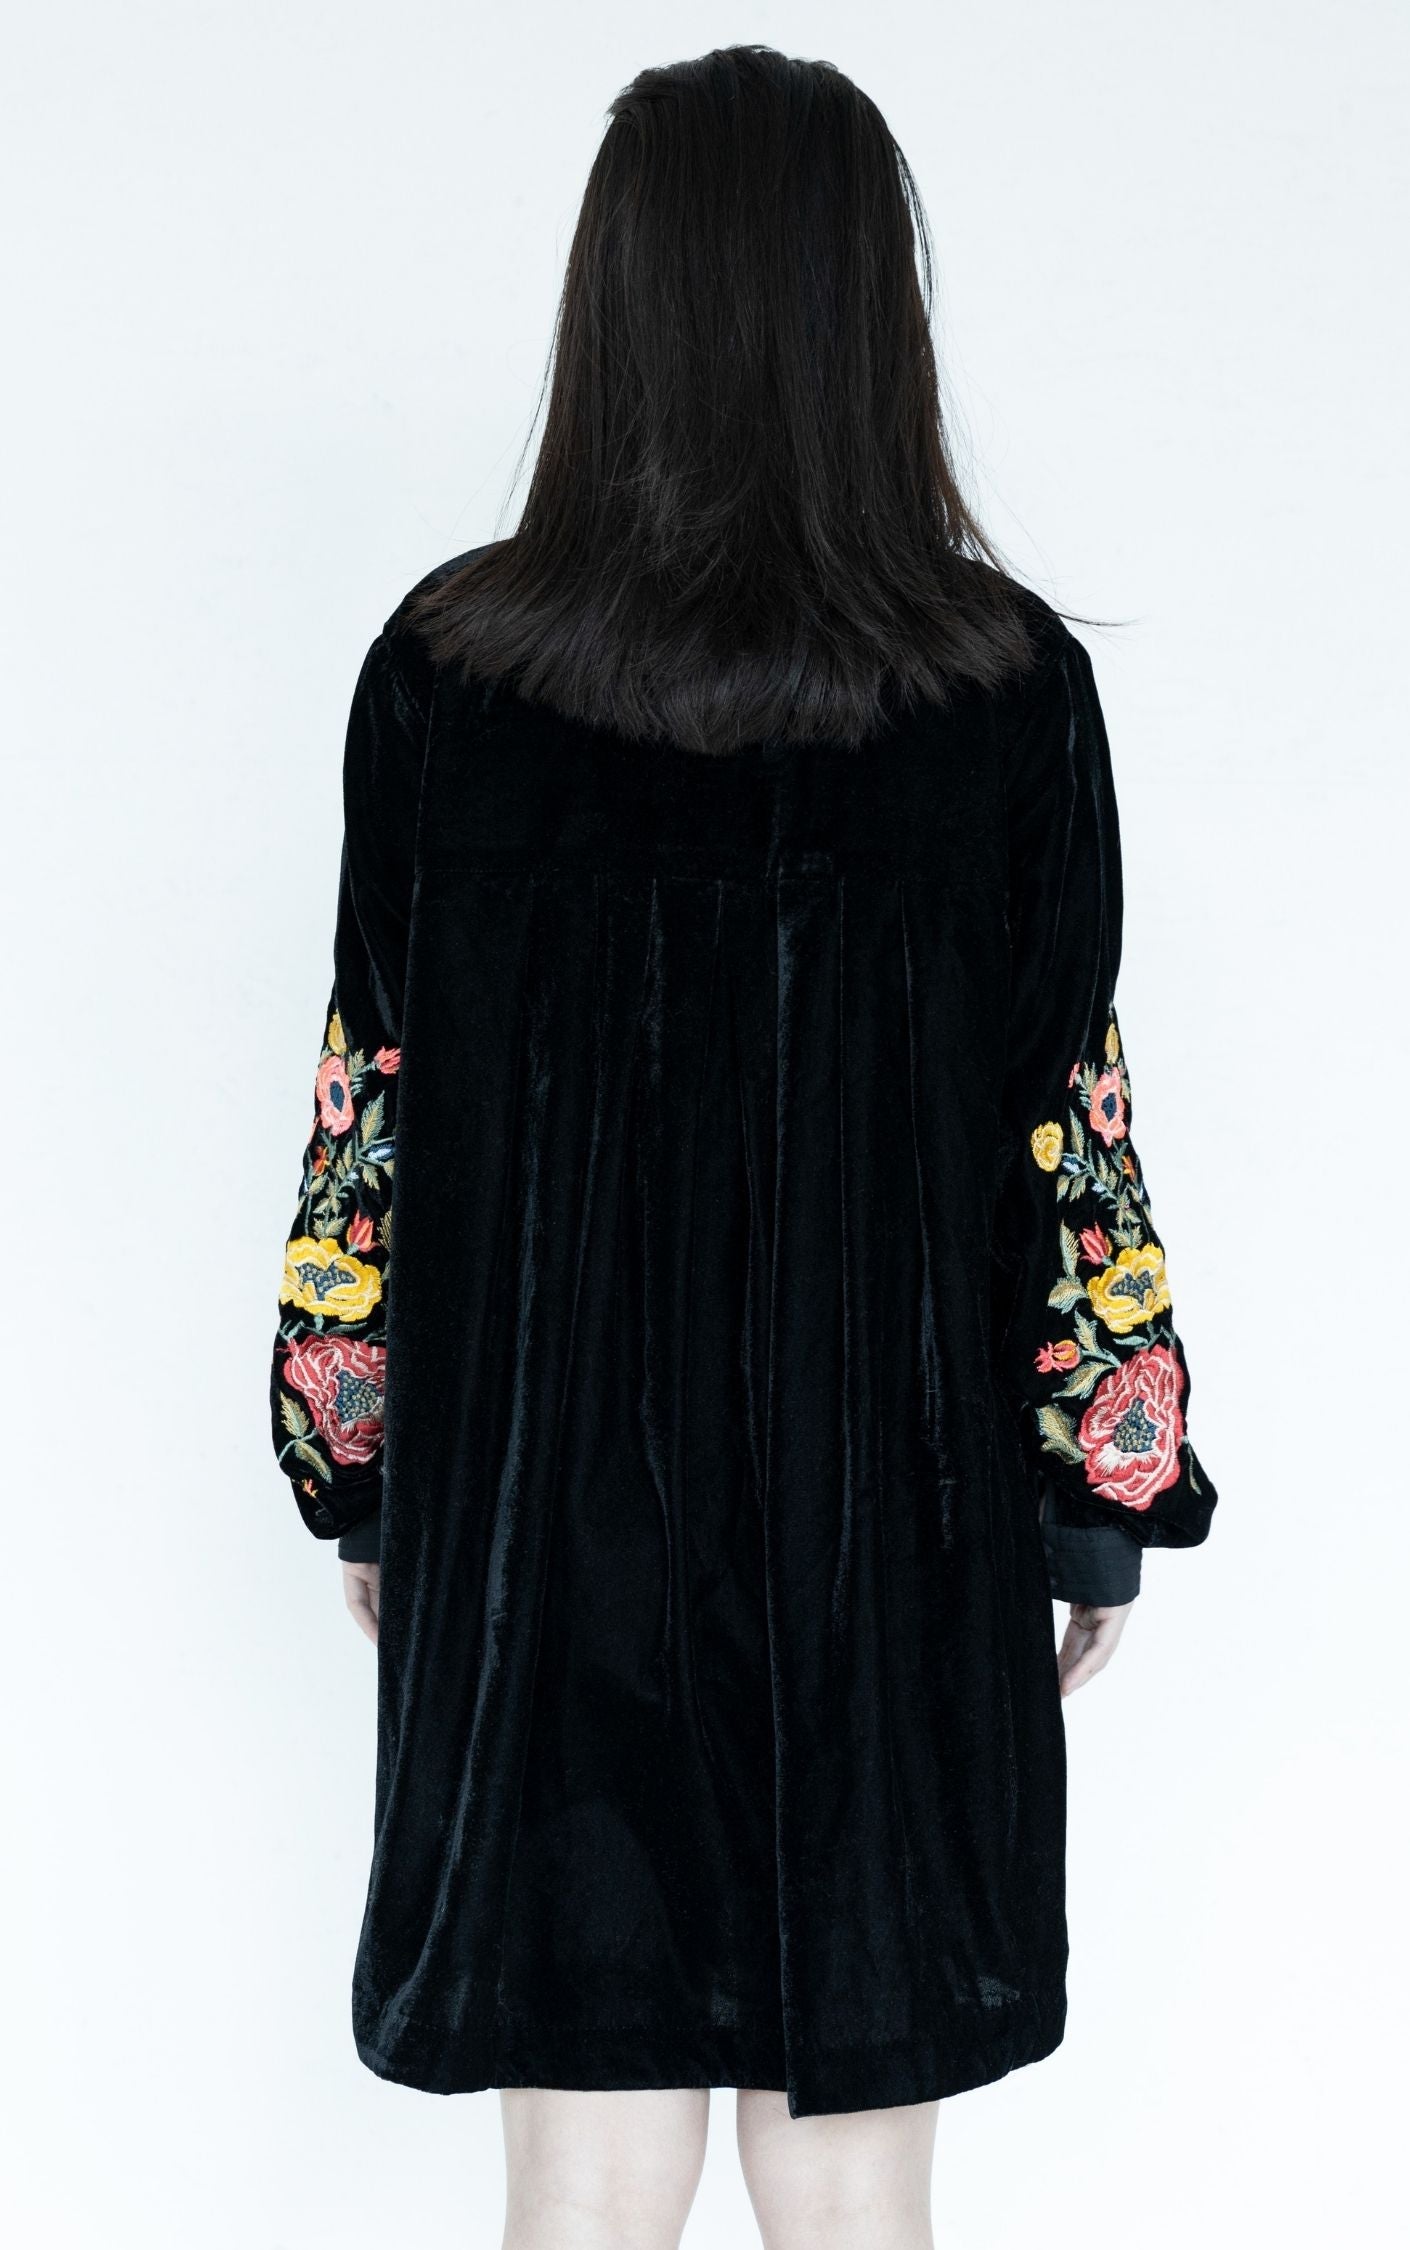 FREE PEOPLE Mia Black Velvet Floral Embroidered Dress RESELLUM